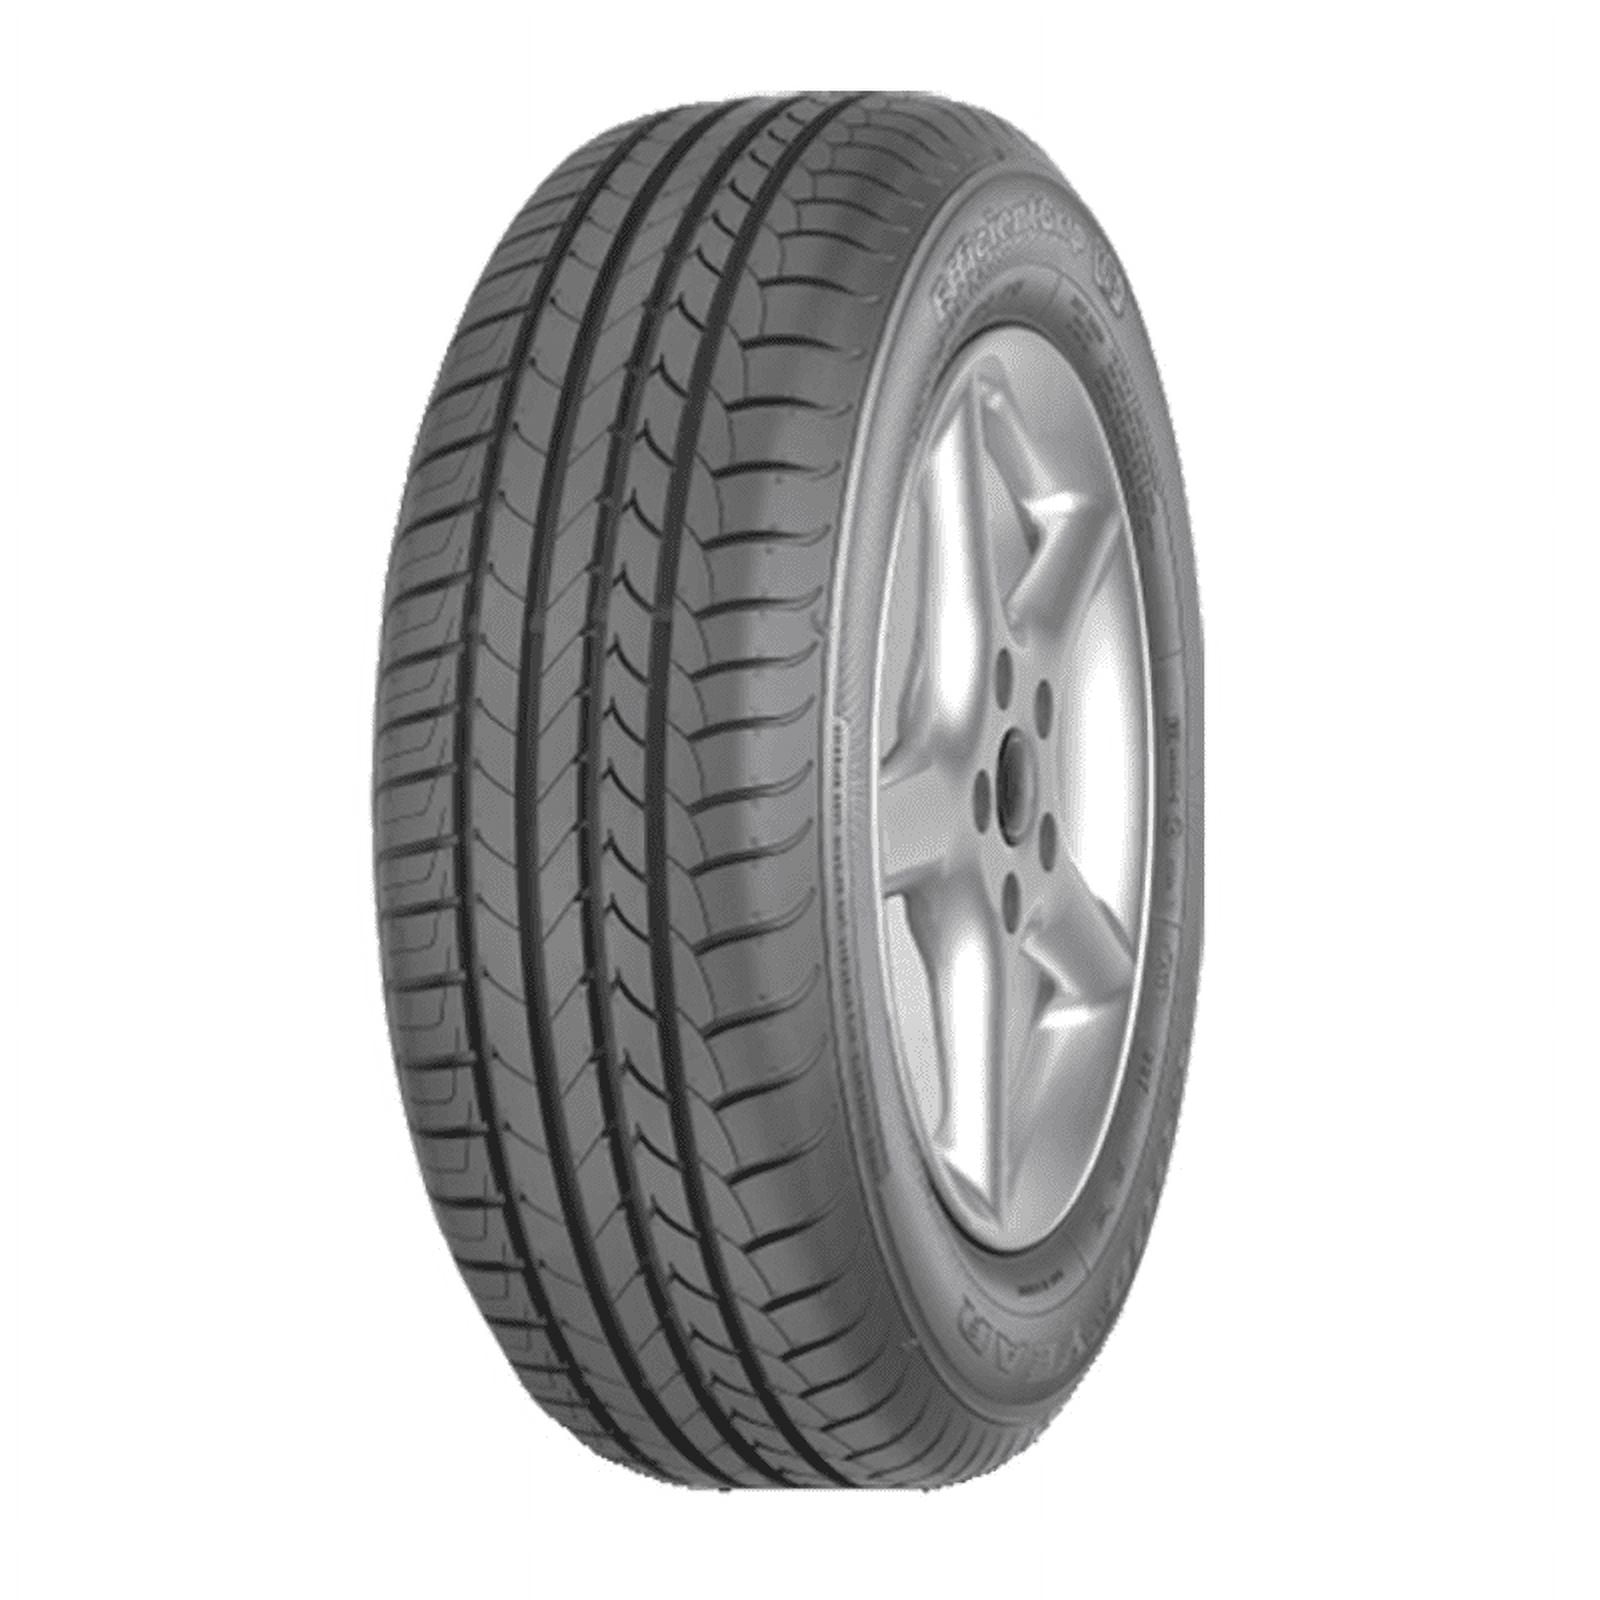 Goodyear EfficientGrip Performance 215/60R17 H 96 Tire